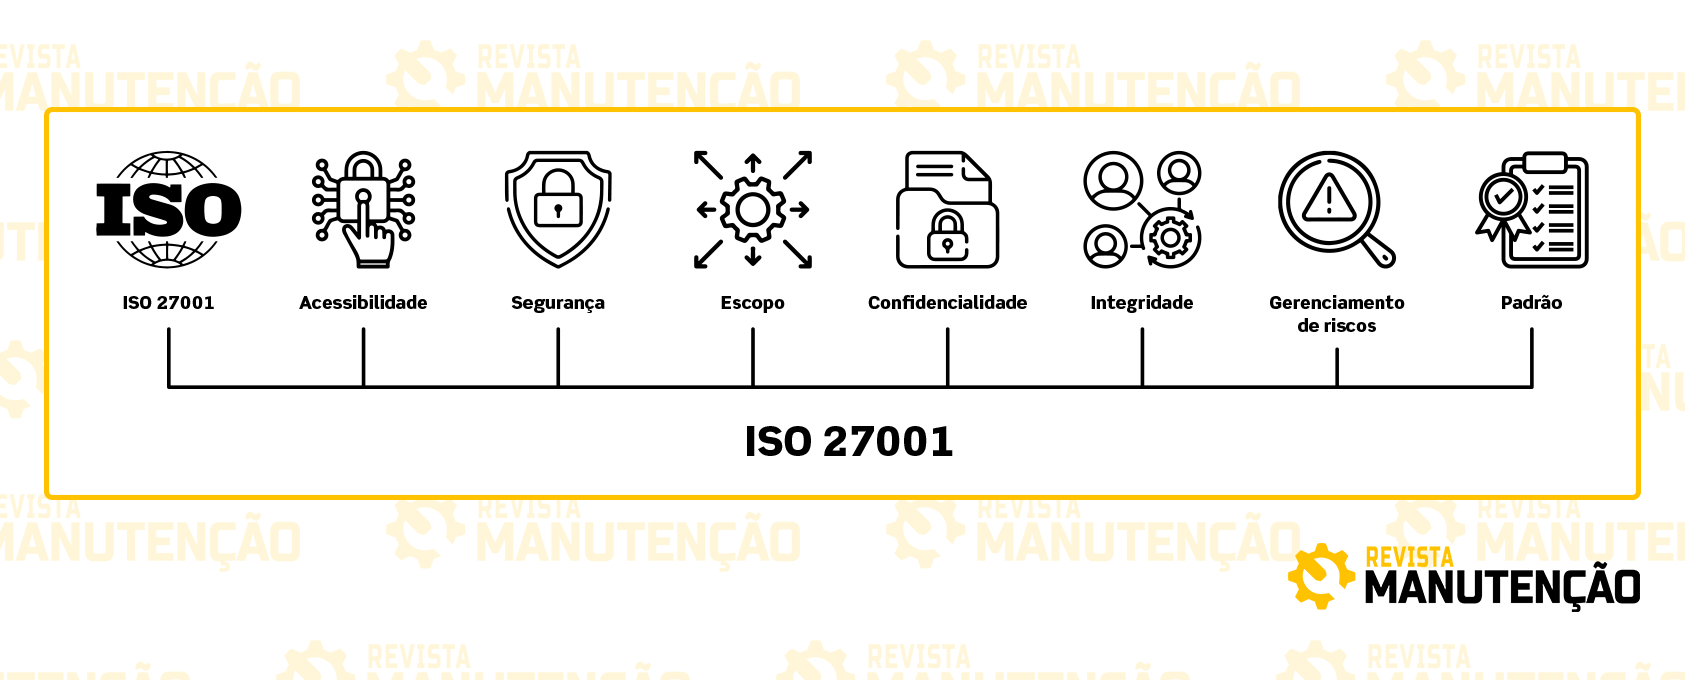 abordagem ISO 27001